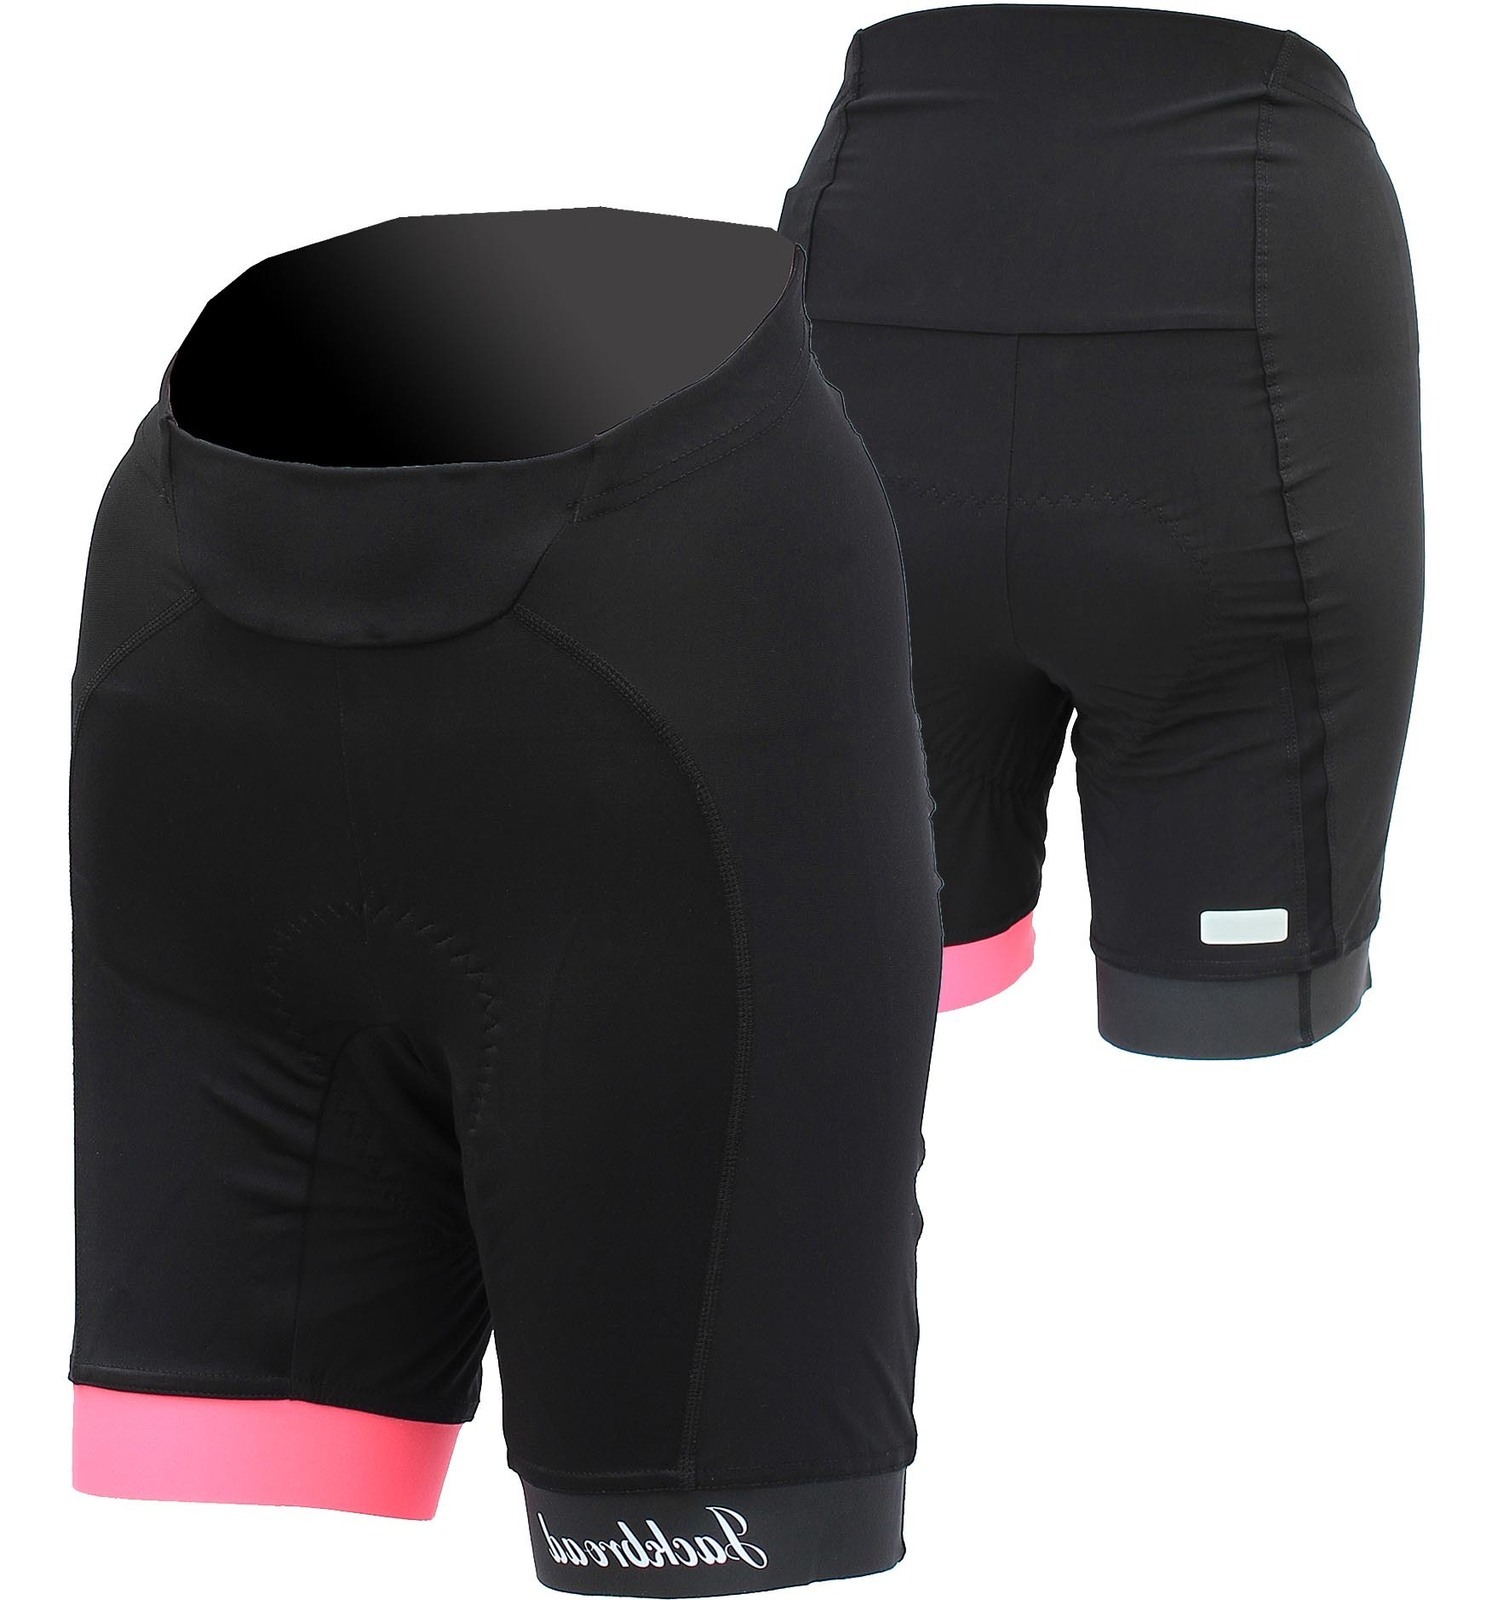 Jackbroad Premium Quality Cycling Padded Shorts Black Pink XL